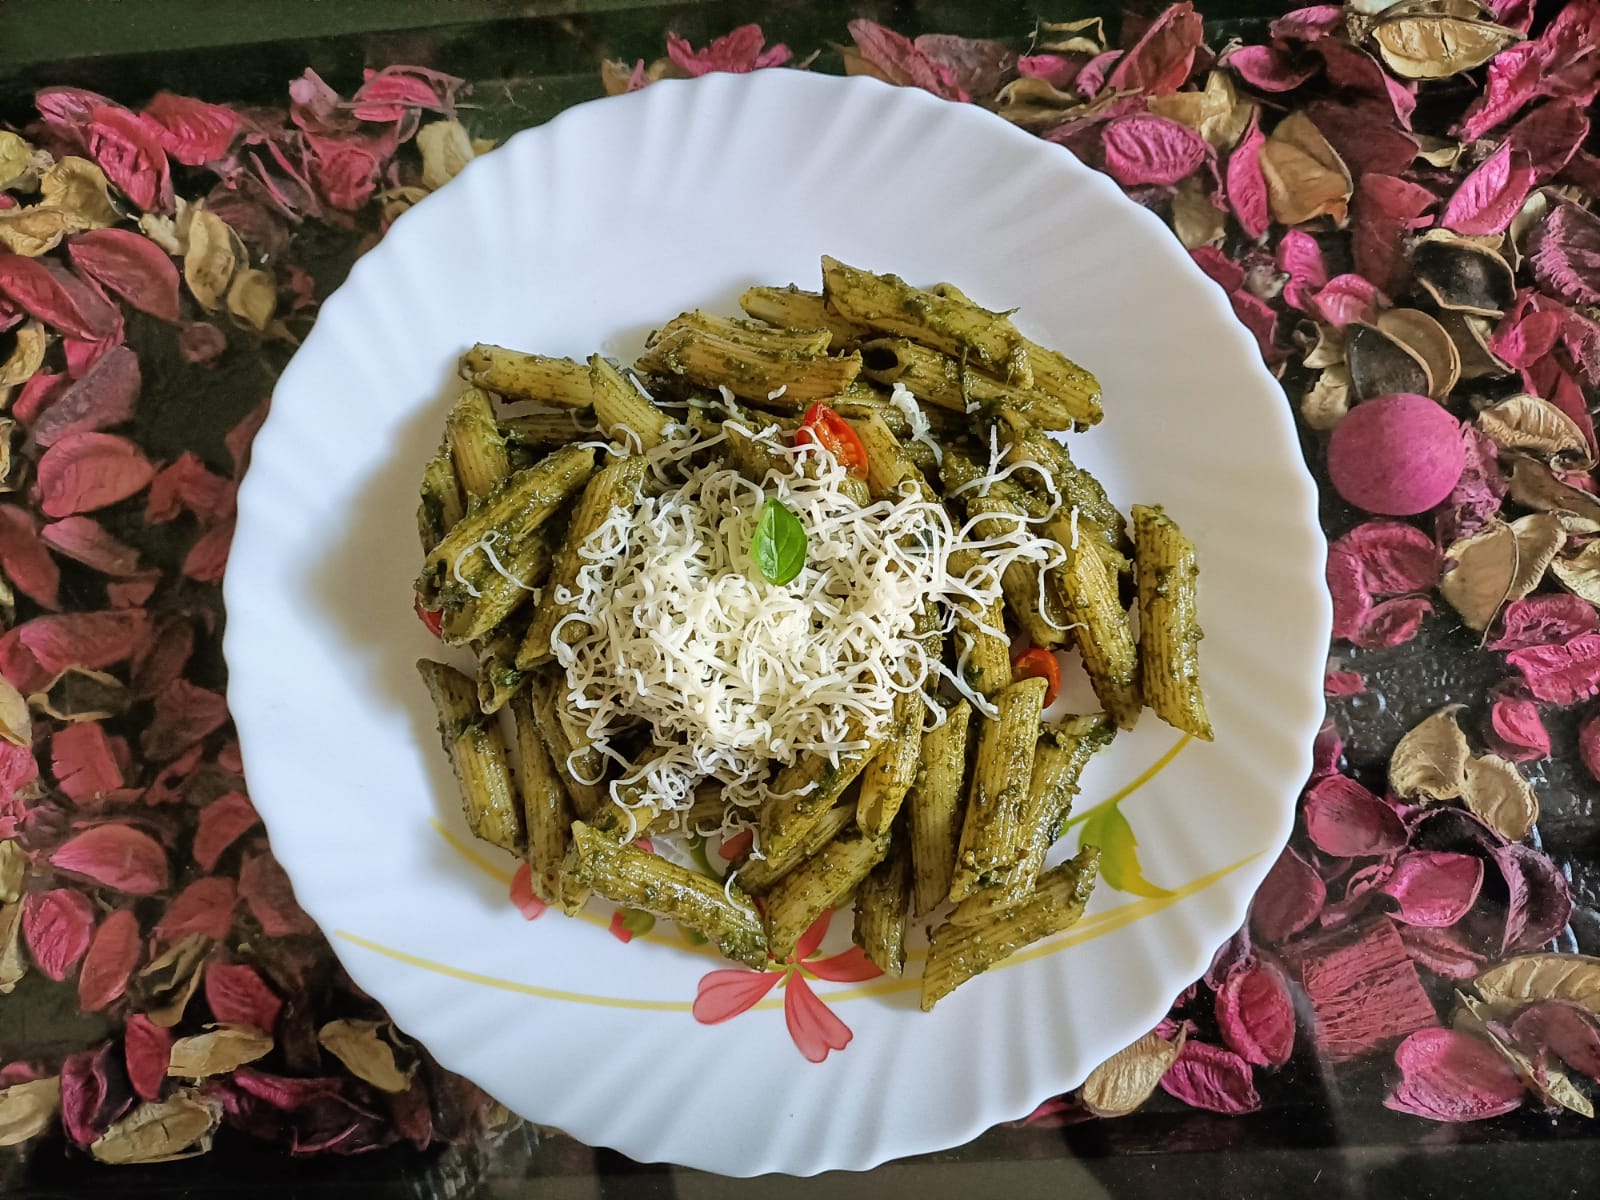 Pesto Pasta on a plate